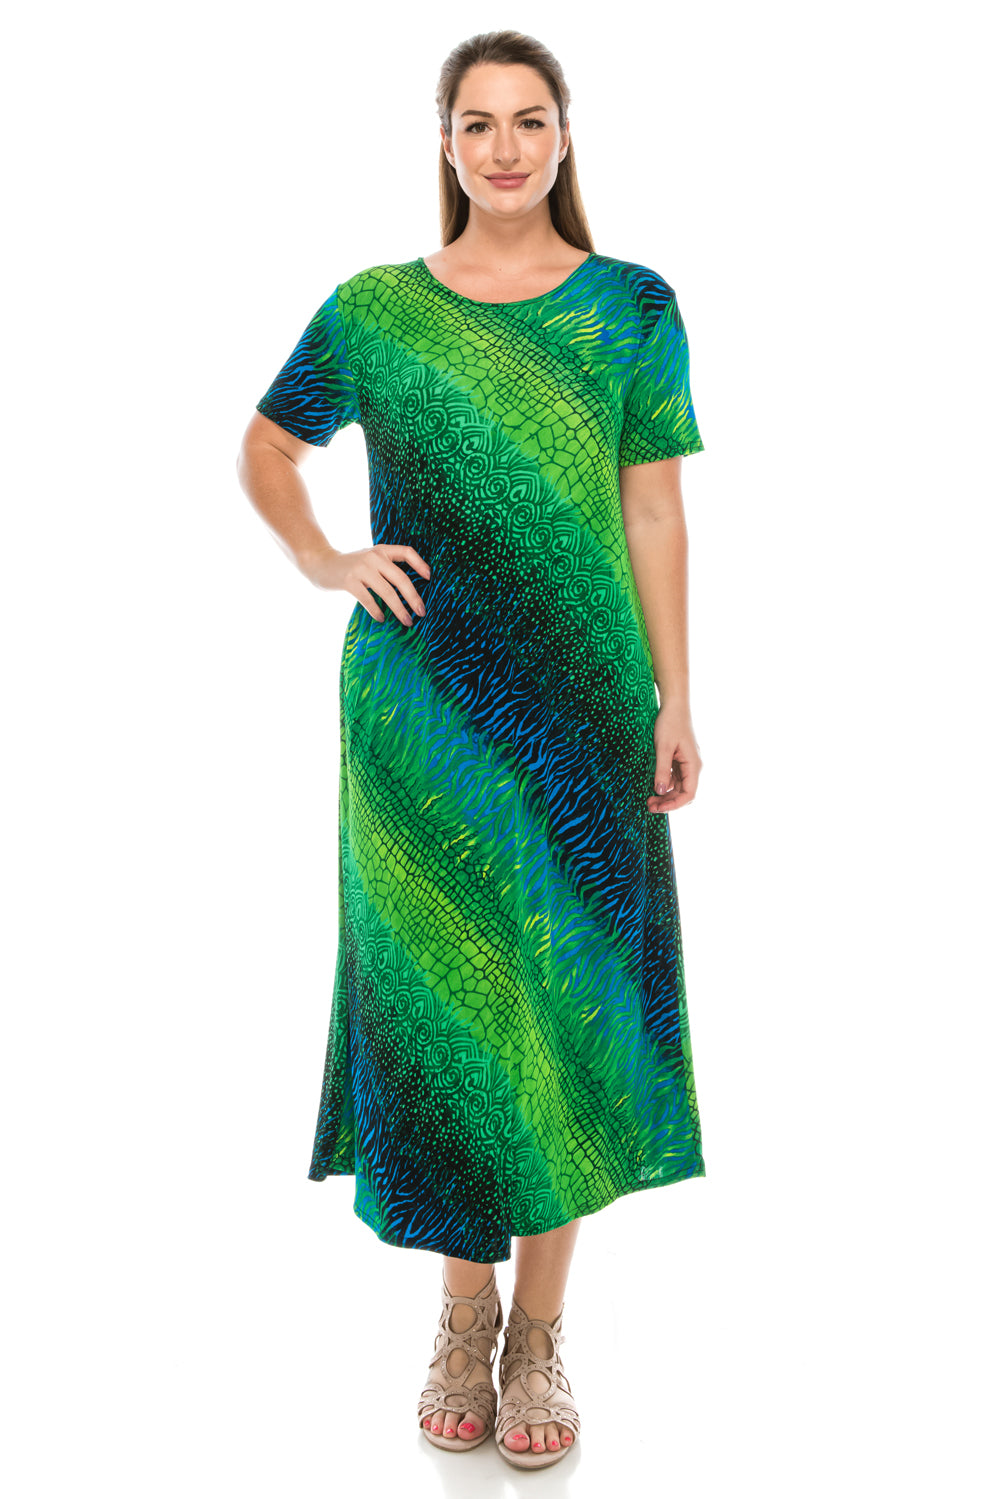 Jostar Women's Stretchy Long Dress Short Sleeve Print, 702BN-SP-W182 - Jostar Online